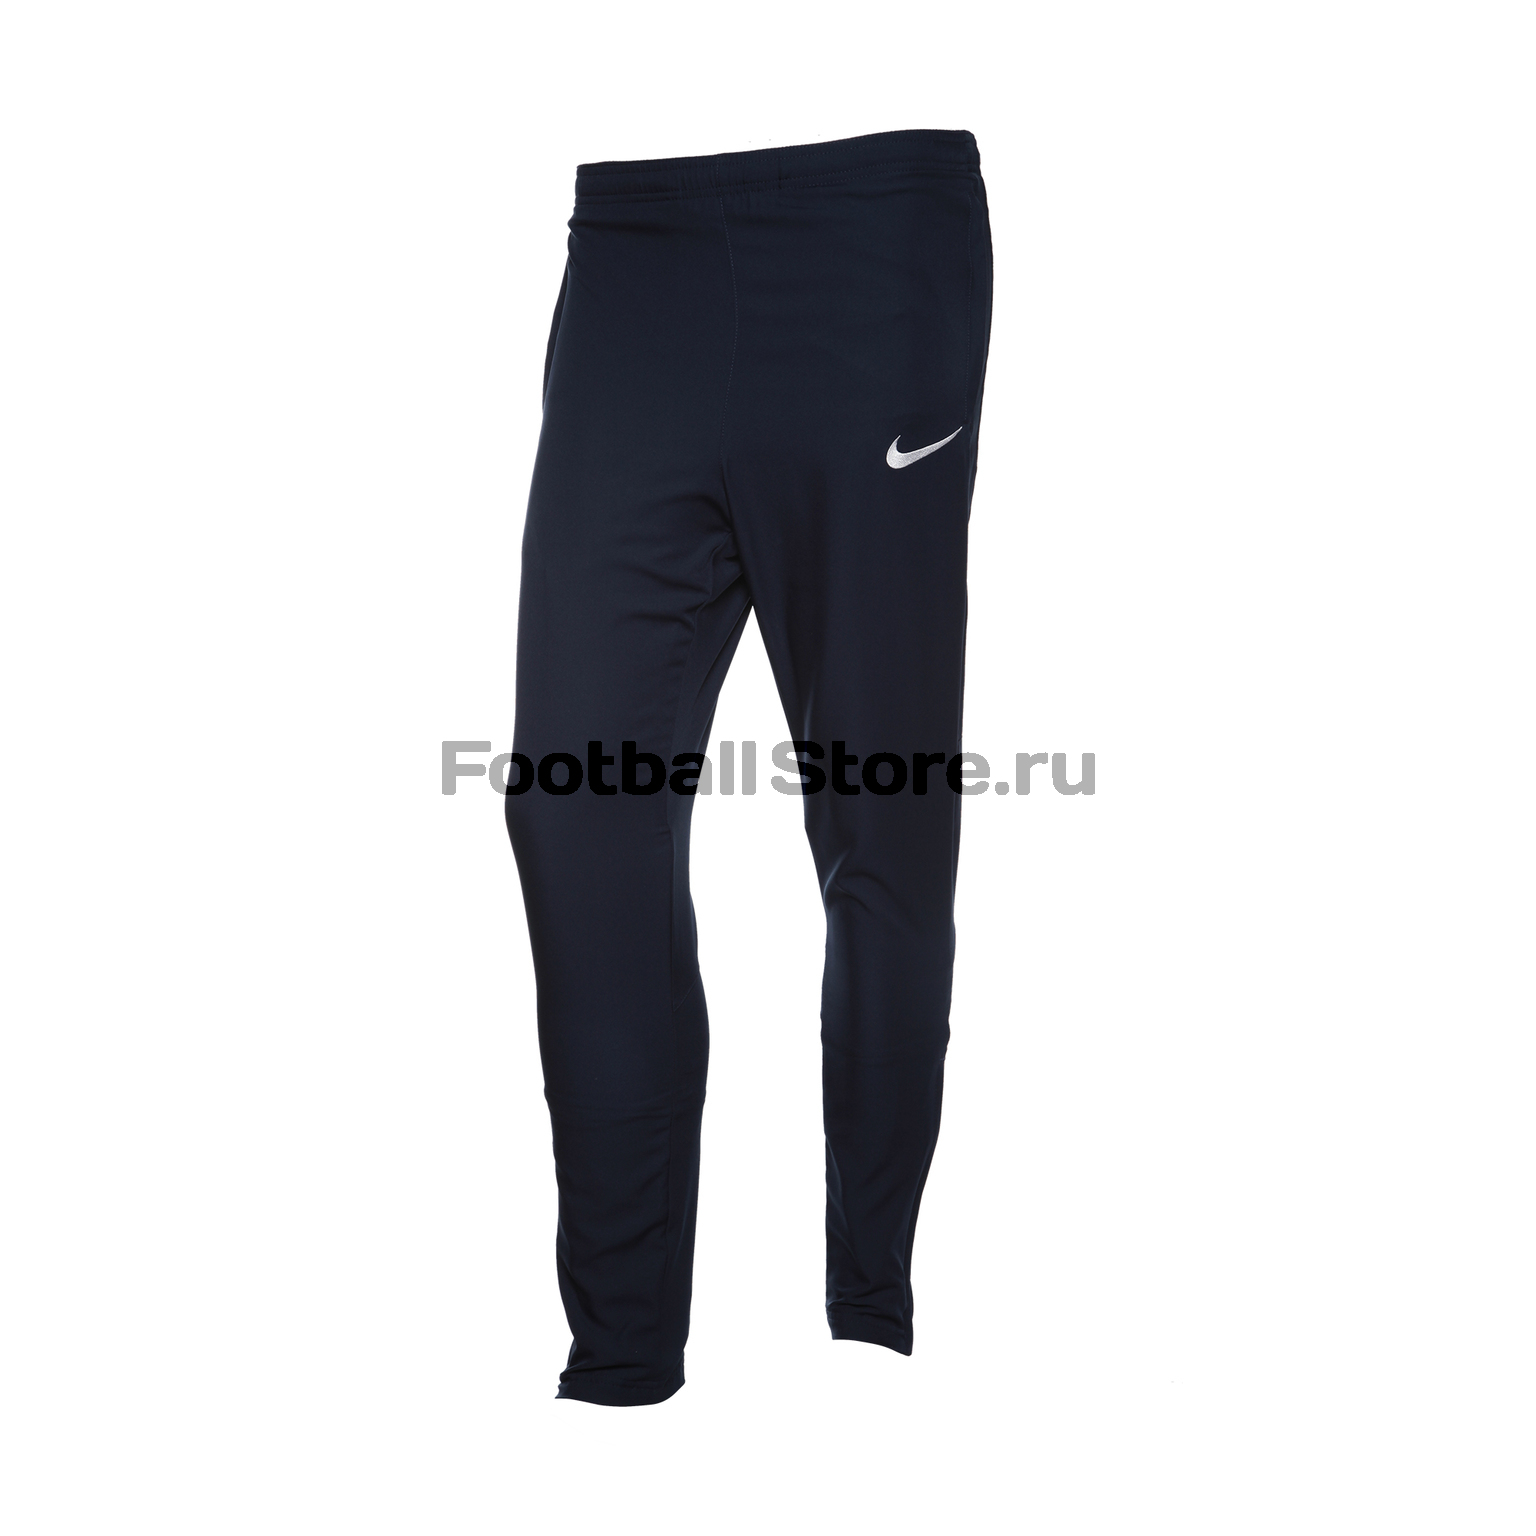 Костюм спортивный Nike Dry Academy18 TRK Suit W 893709-463